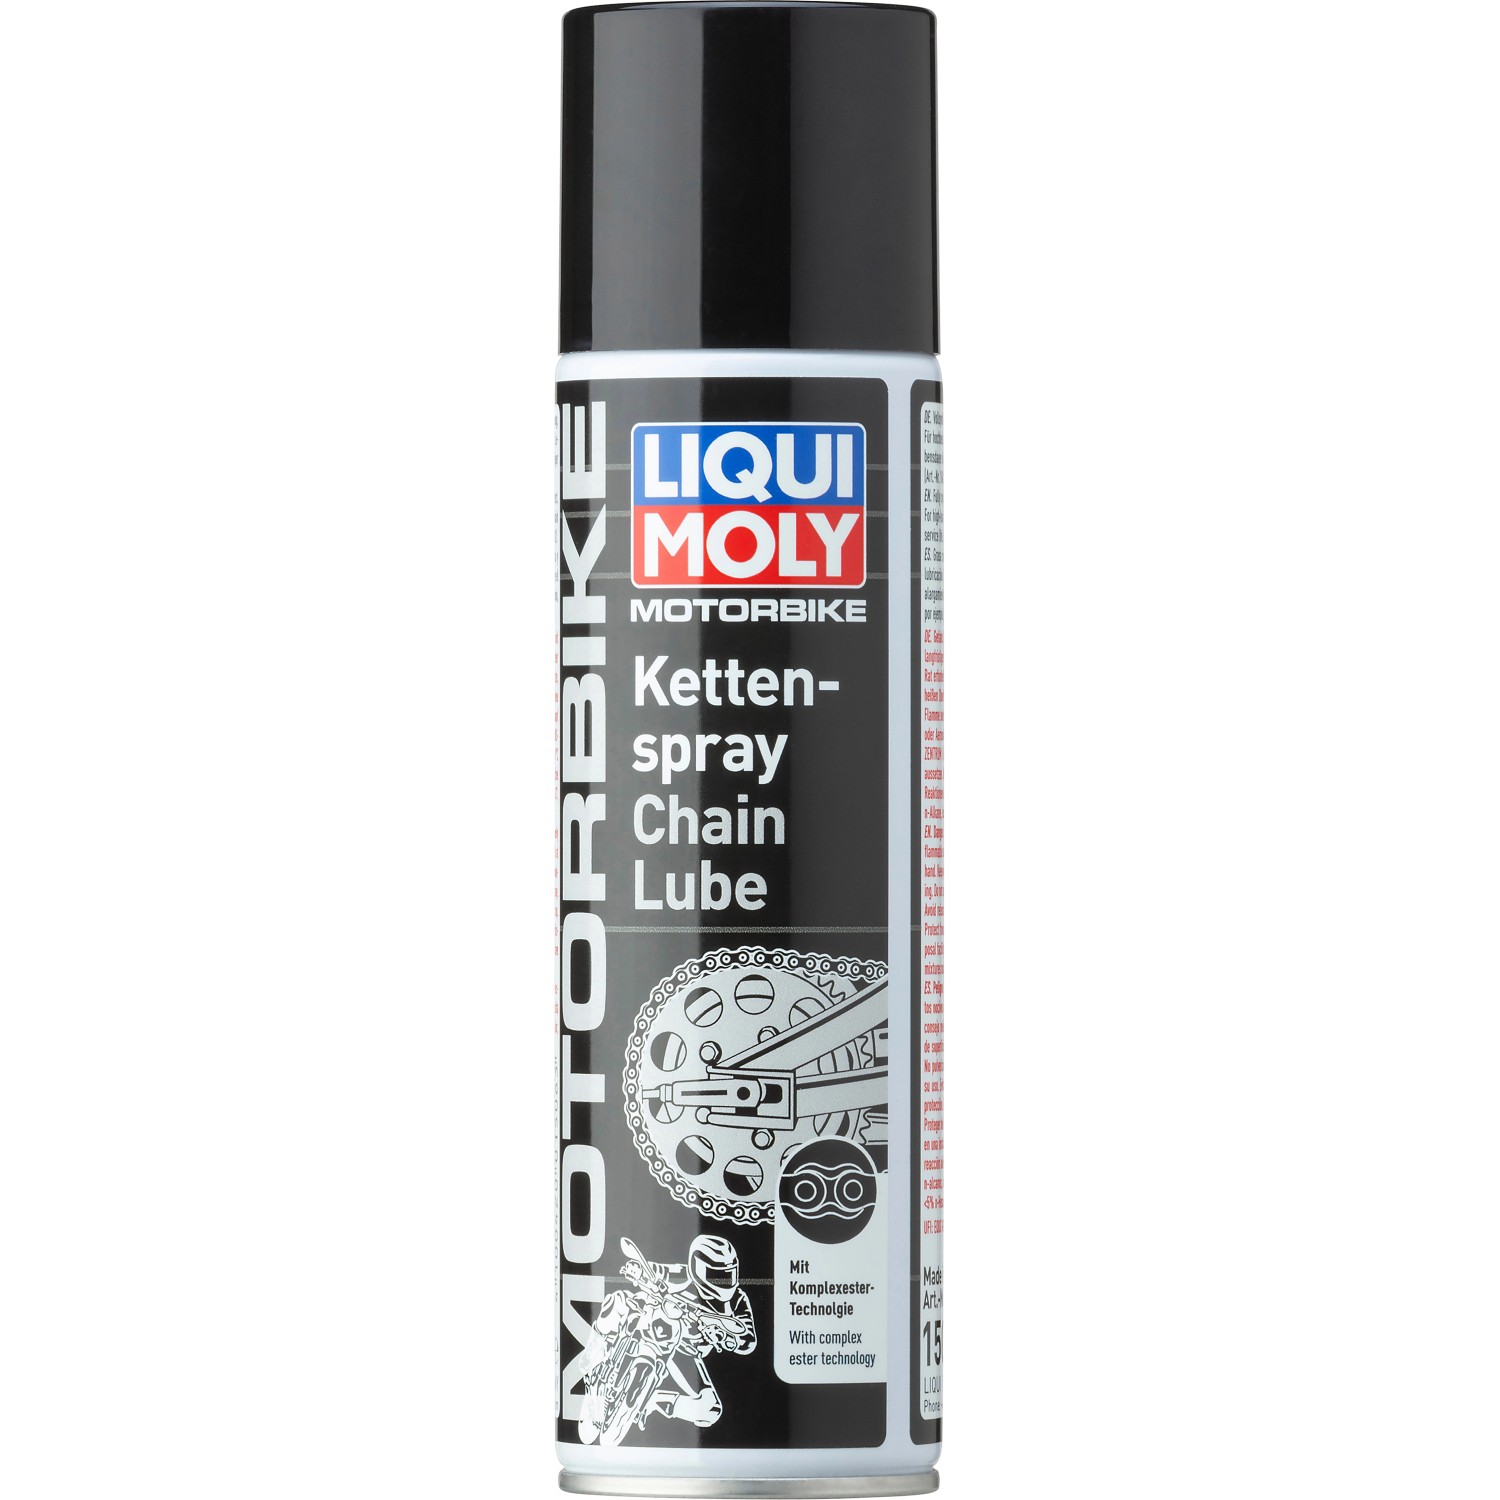 Liqui Moly Motorbike Chain Lube Kettenfett 250 ml kaufen bei OBI